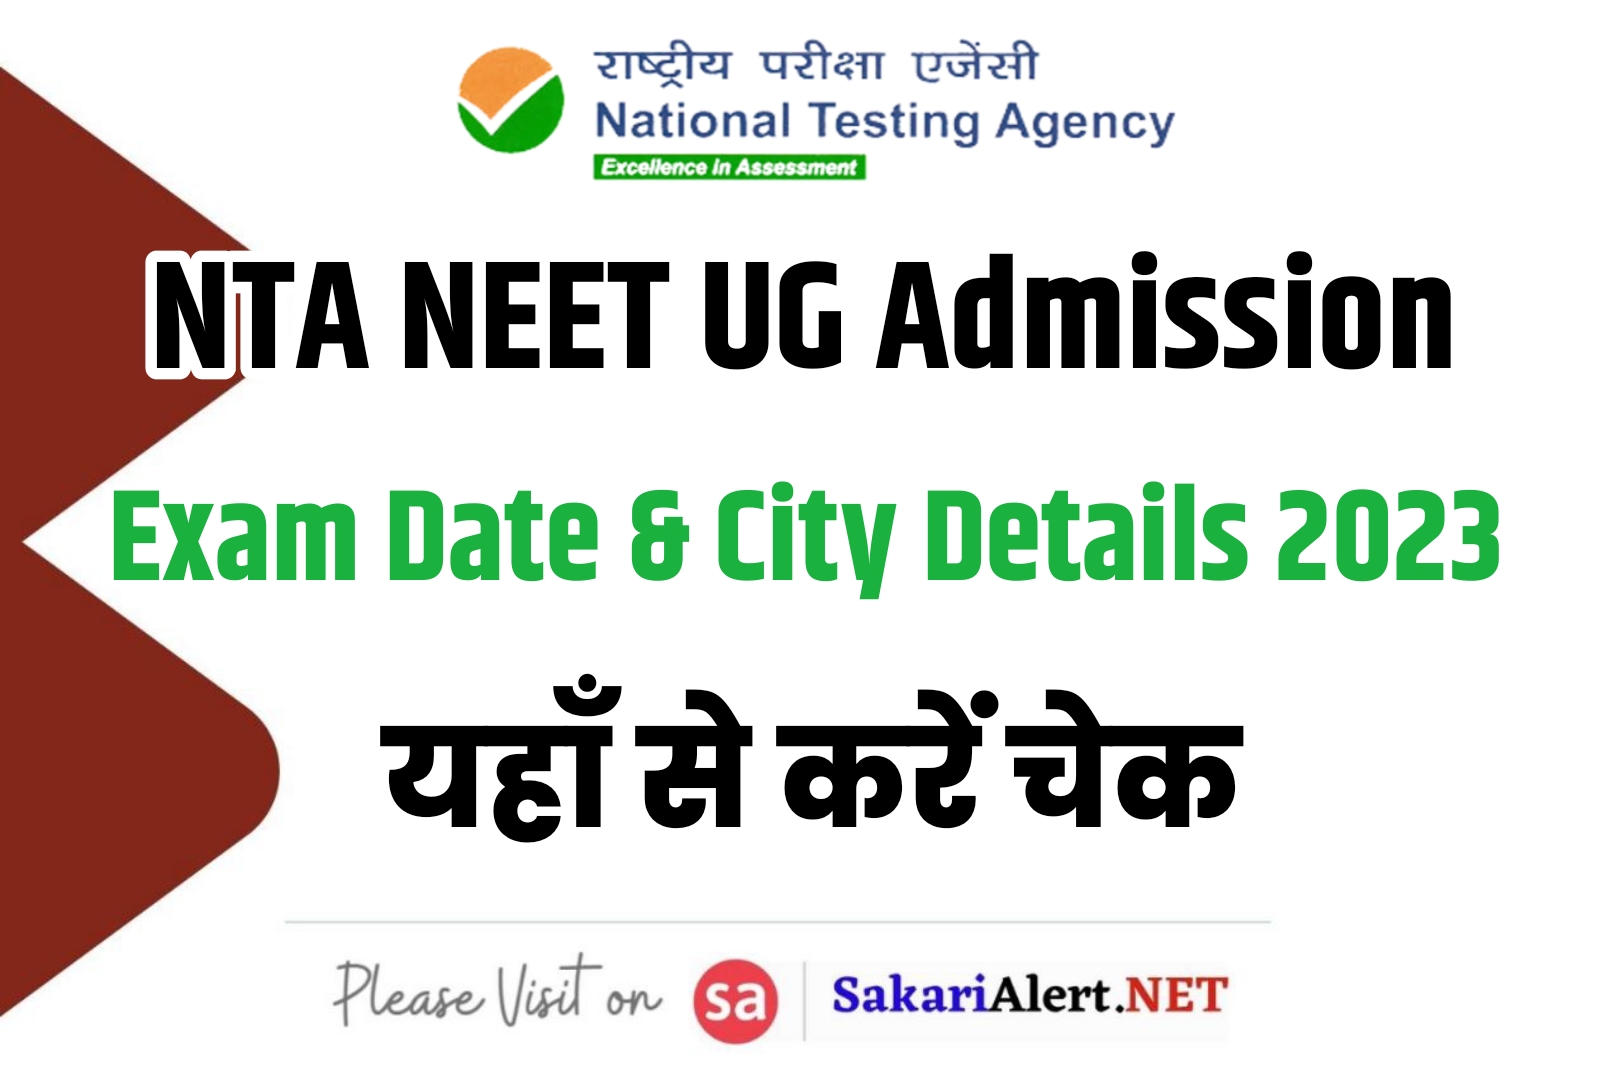 NTA NEET UG Admission Exam Date & City Details 2023| एनटीए एनईईटी यूजी एडमिशन परीक्षा तिथि एवं शहर विवरण